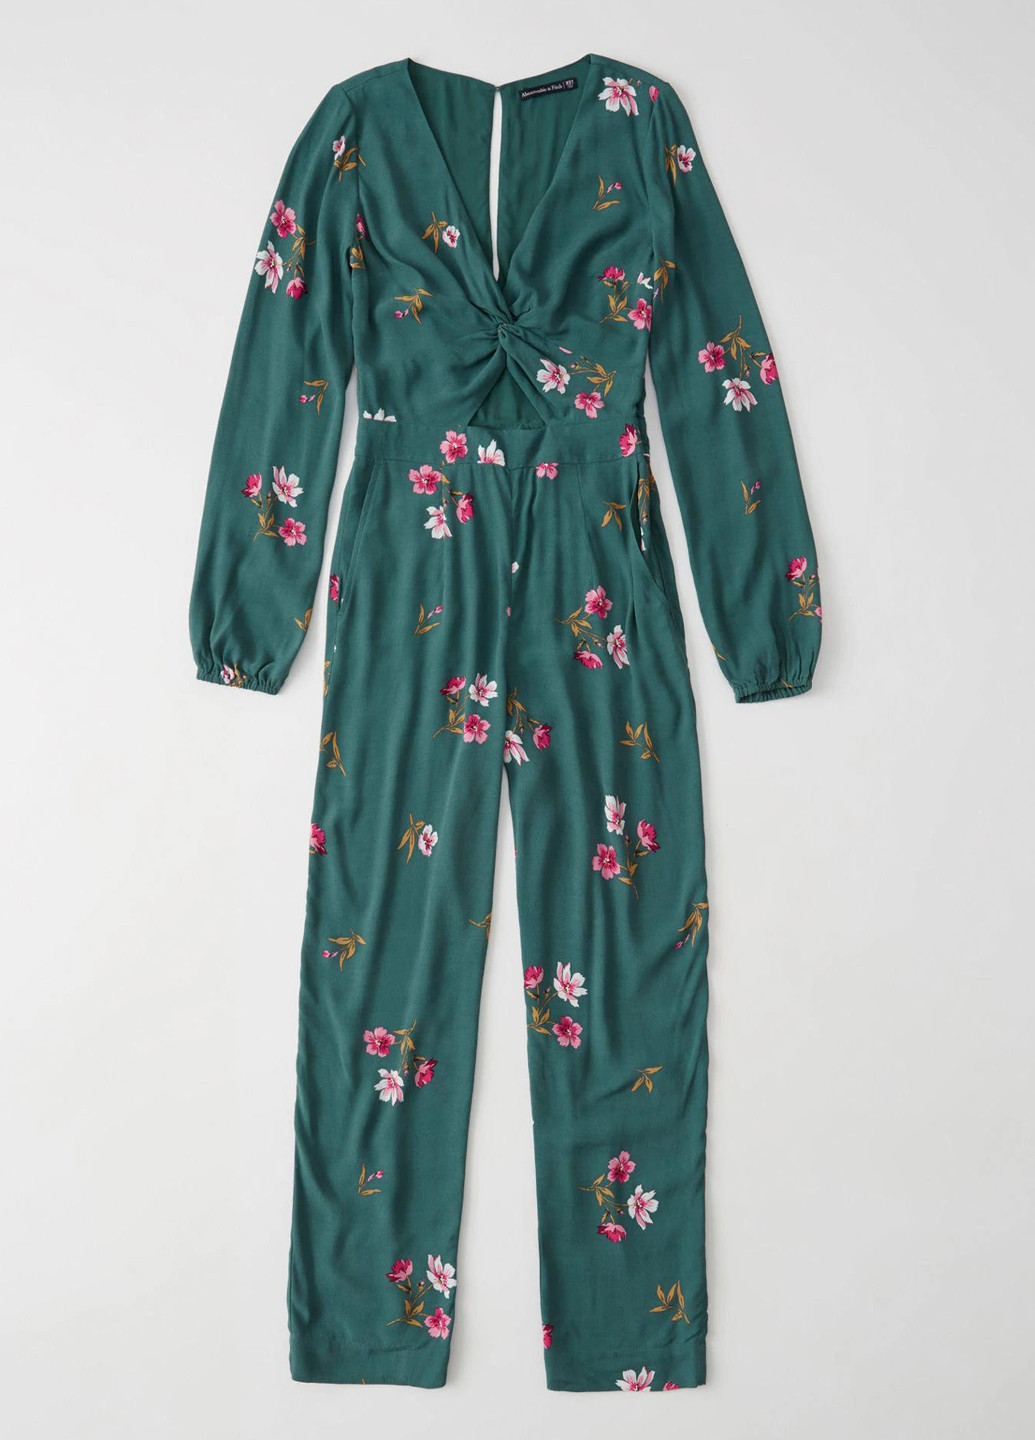 Комбинезон Abercrombie & Fitch комбинезон-брюки цветочный зелёный кэжуал